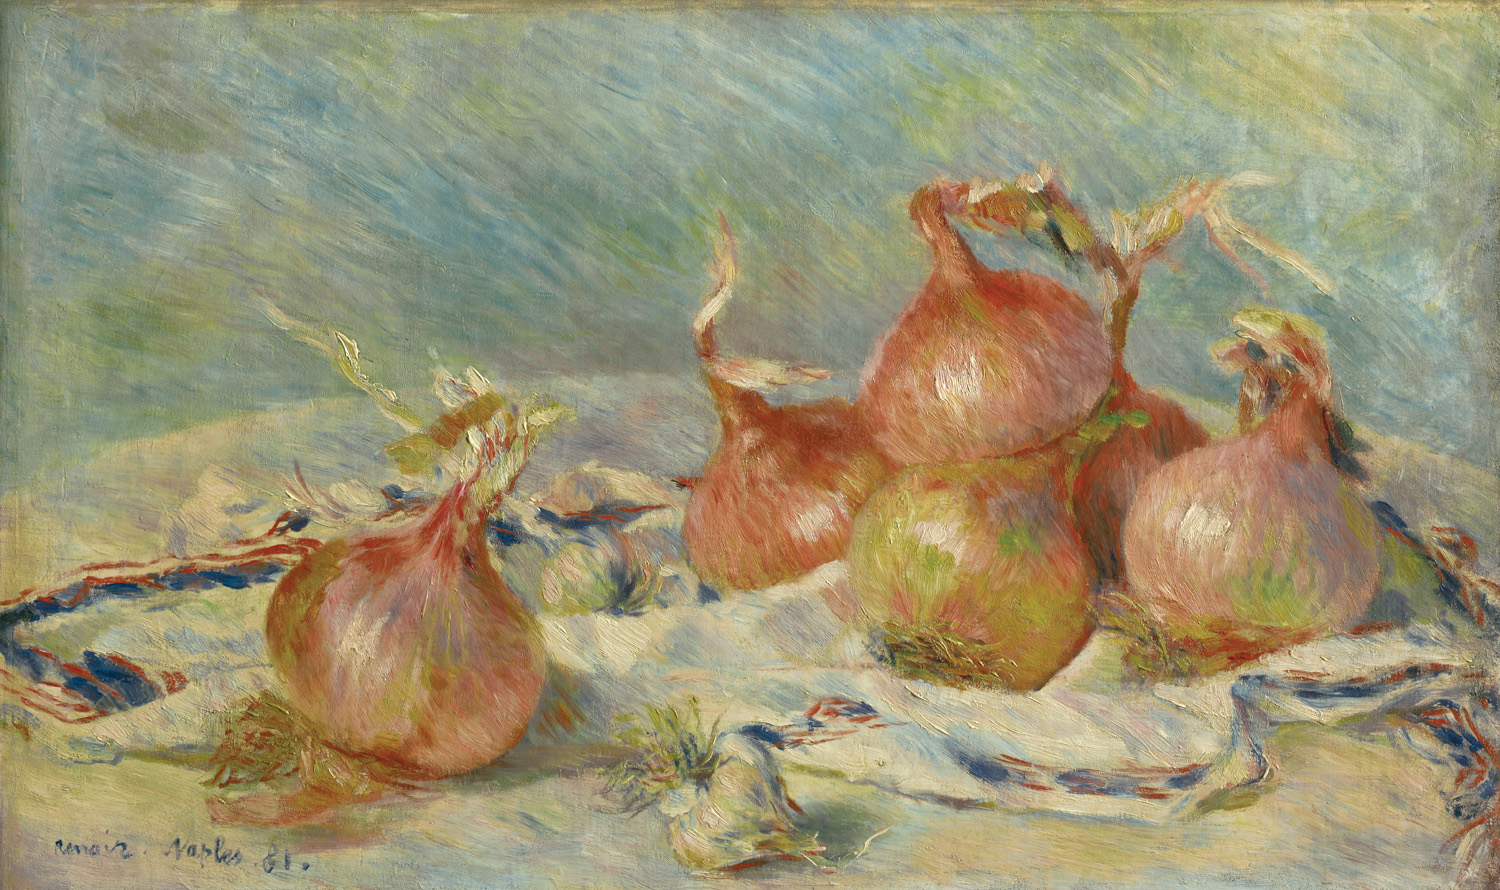 Soğanlar by Pierre-Auguste Renoir - 1881 